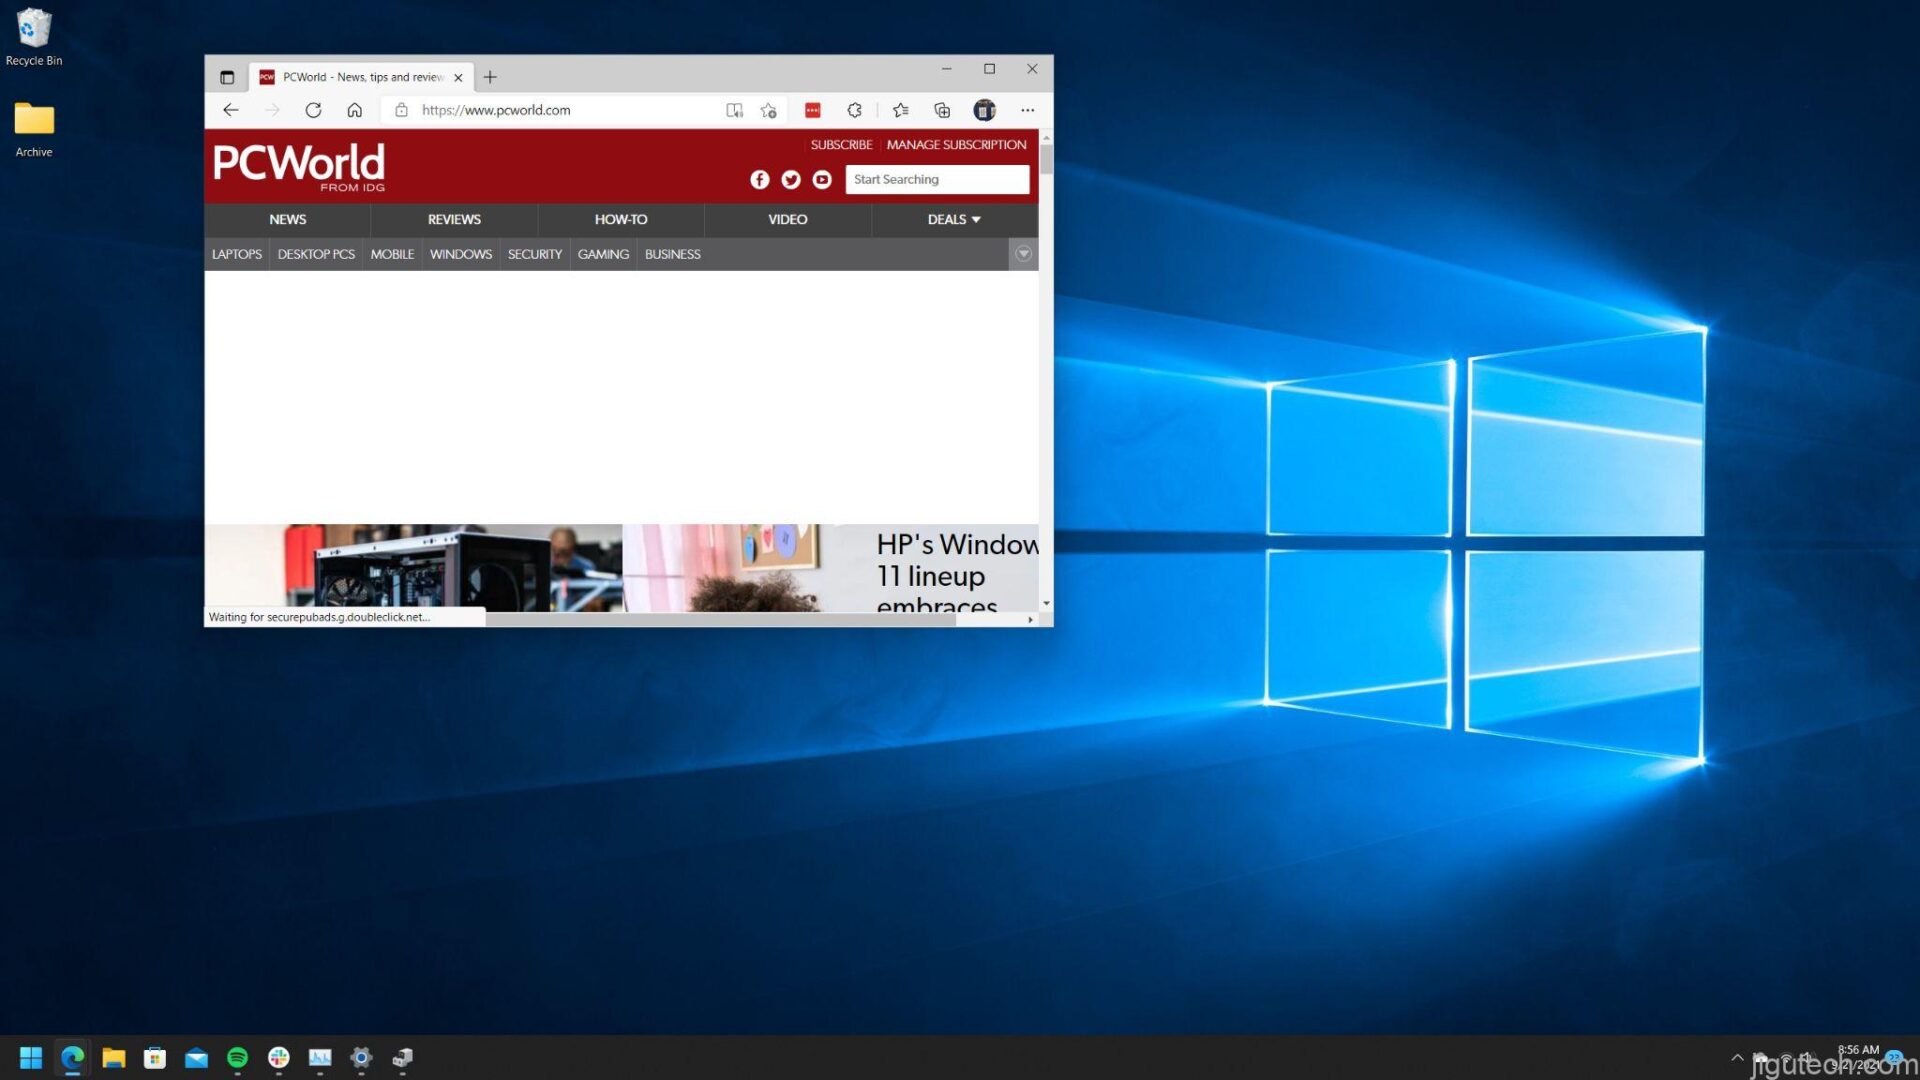 Windows 11 as Windows 10